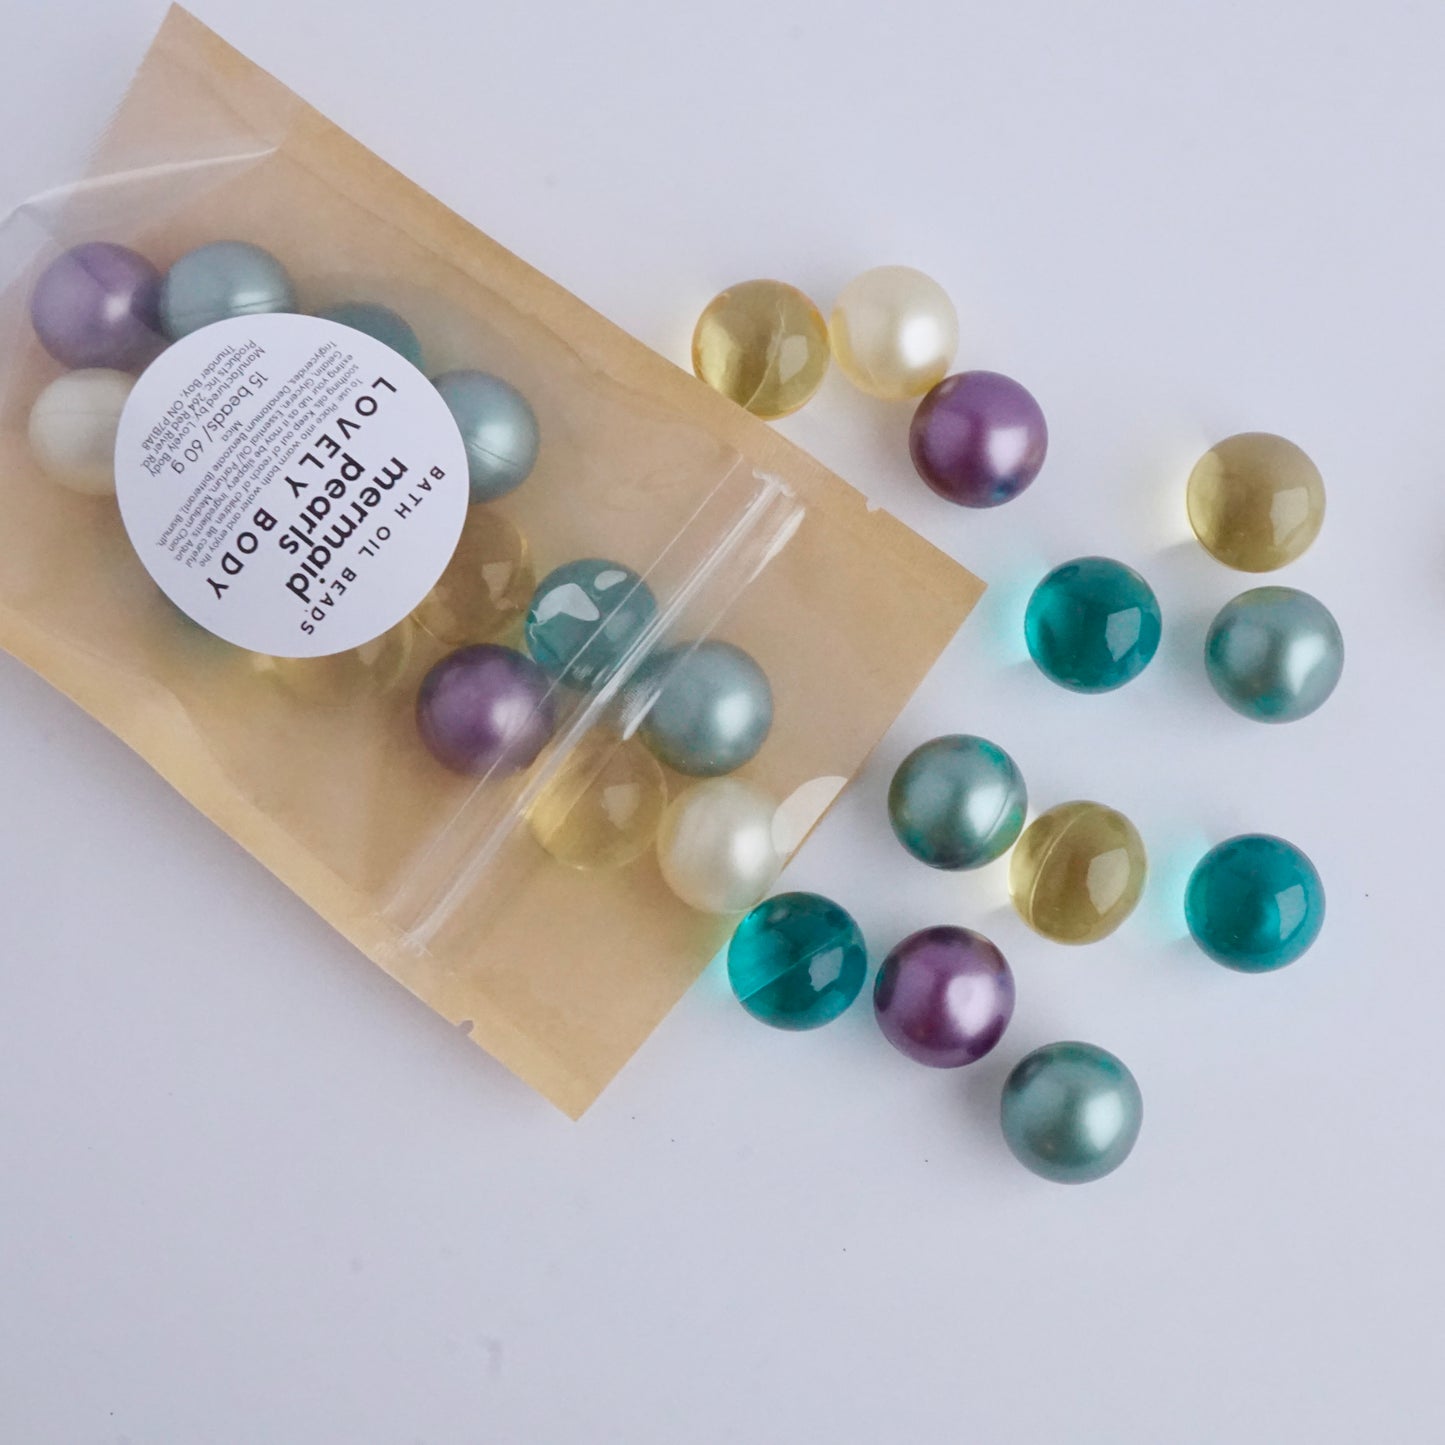 Mermaid Pearls Bath Oil Beads - Assorted Shapes